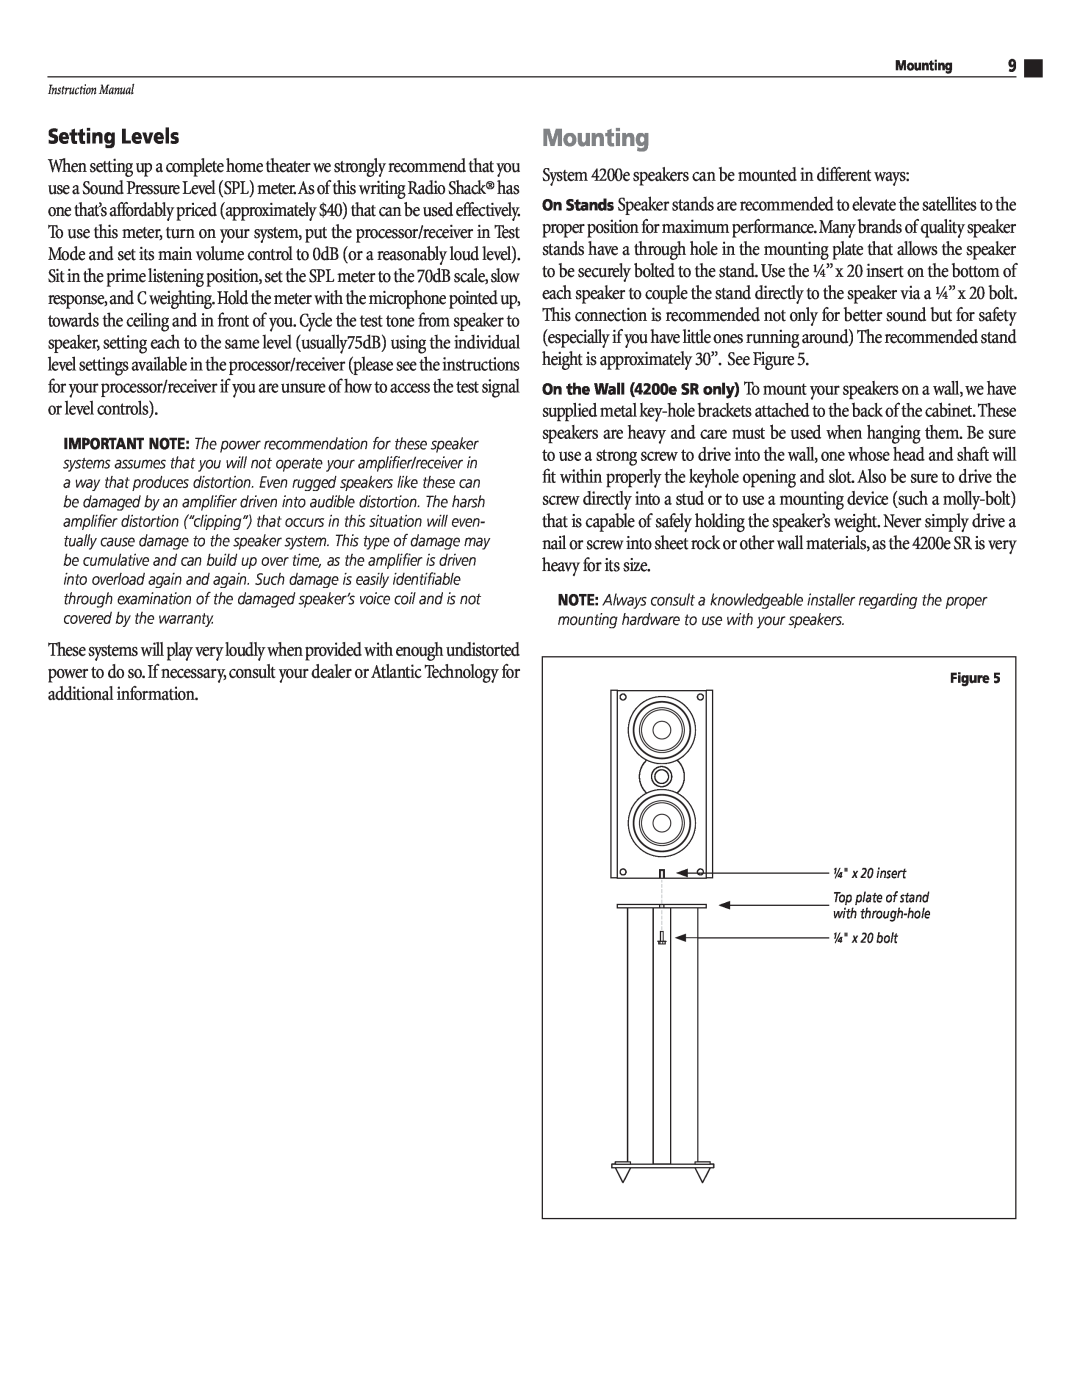 Atlantic Technology 4200e THX instruction manual Mounting, Setting Levels, ¼ x 20 insert, ¼ x 20 bolt 